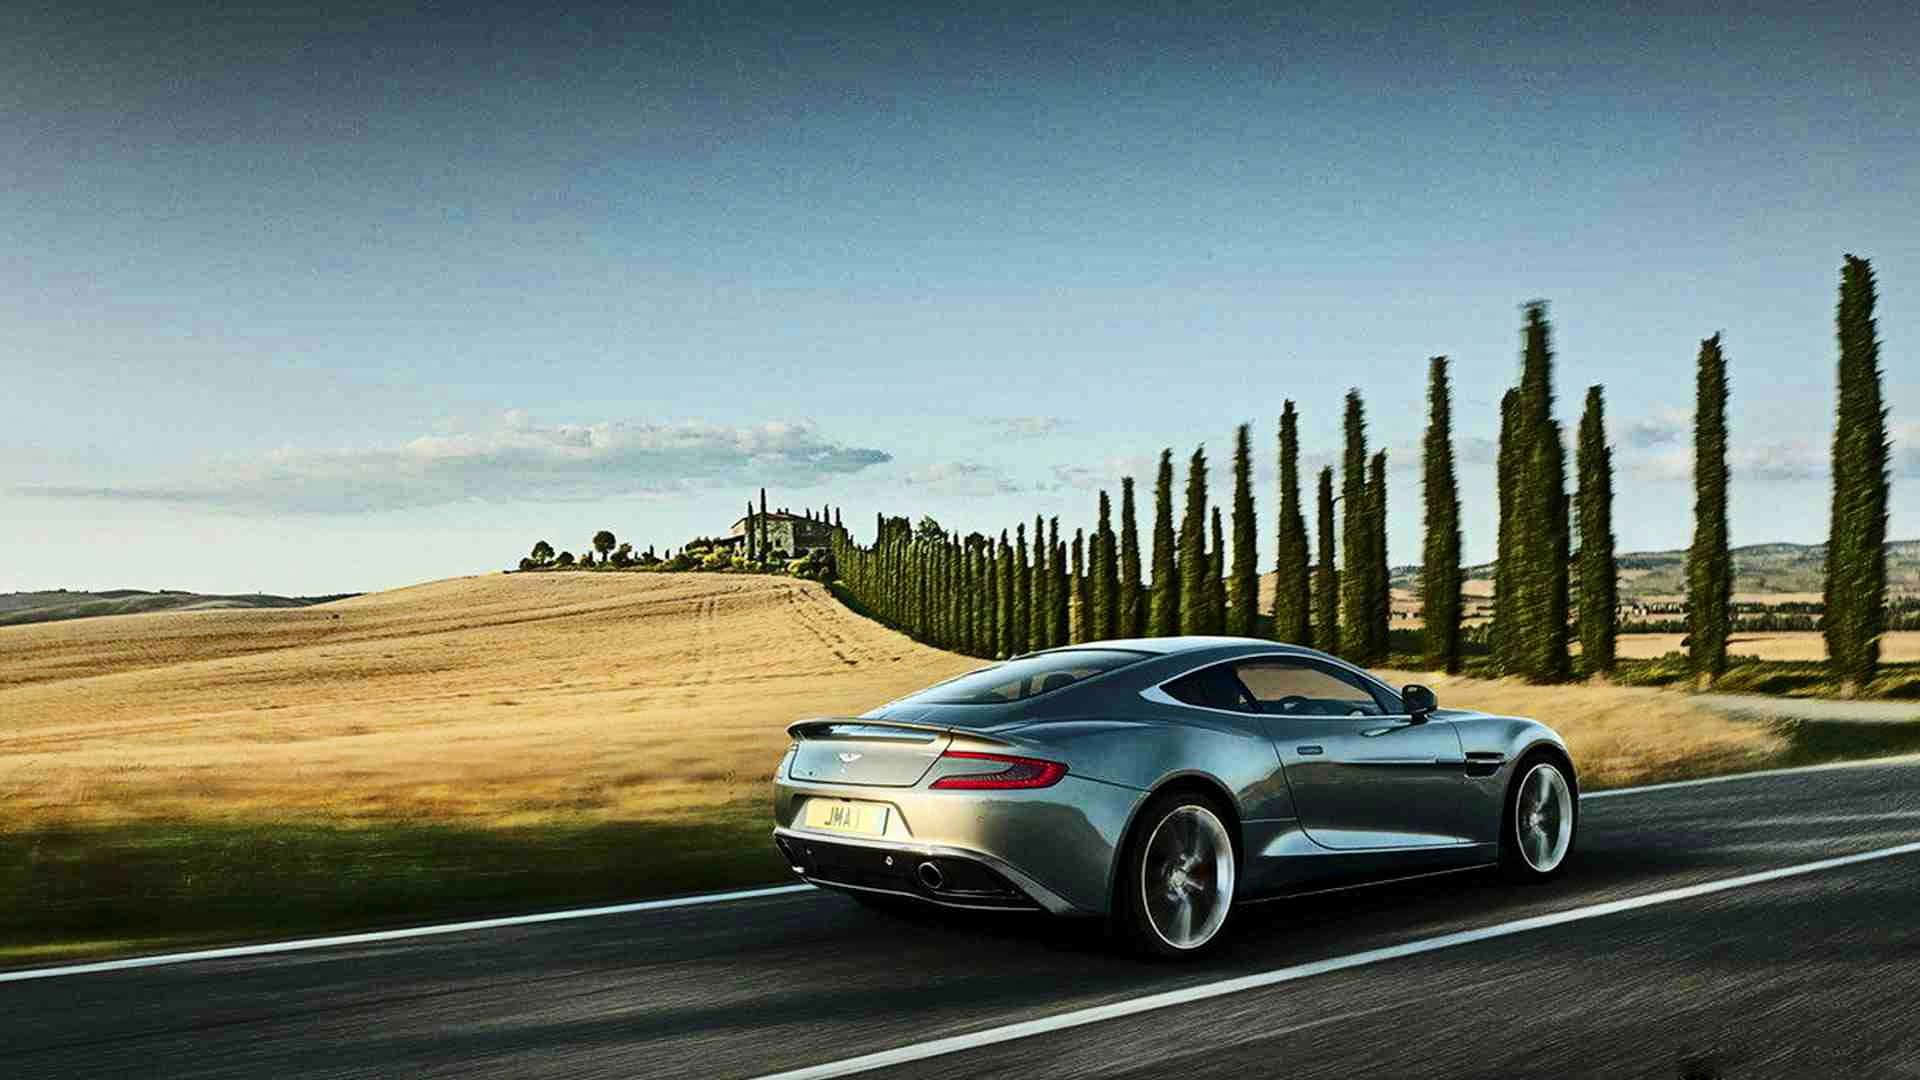 The Stunning Aston Martin DB9 in Elegant Motion Wallpaper